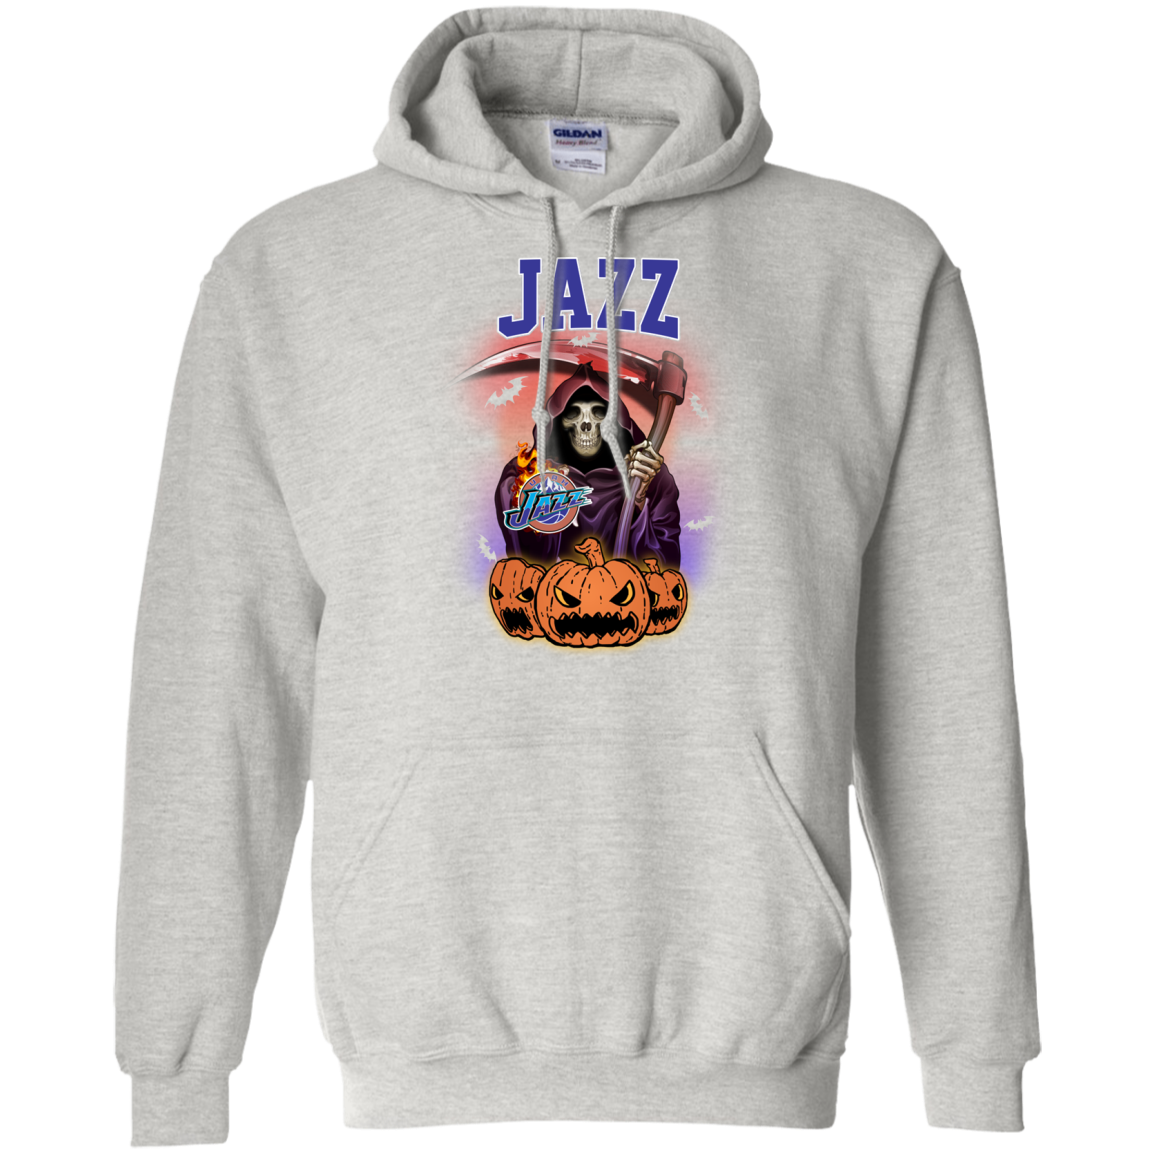 Utah-jazz Reaper The Death Halloween Shirt For Fans 8 Oz.